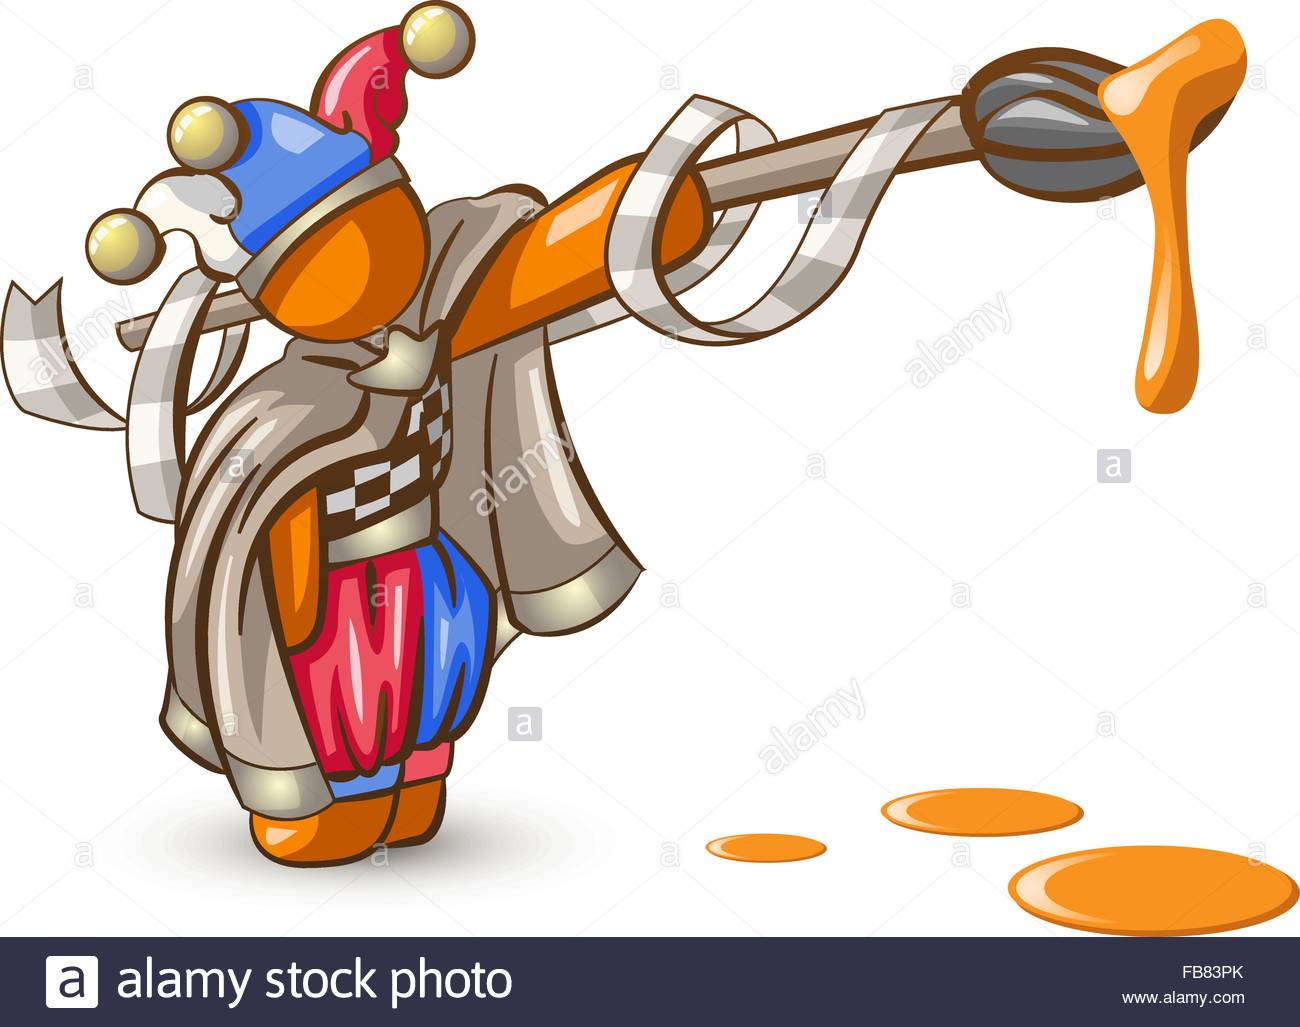 Orange man joker or jester with orange paint brush, dripping, ready to paint the town orange.